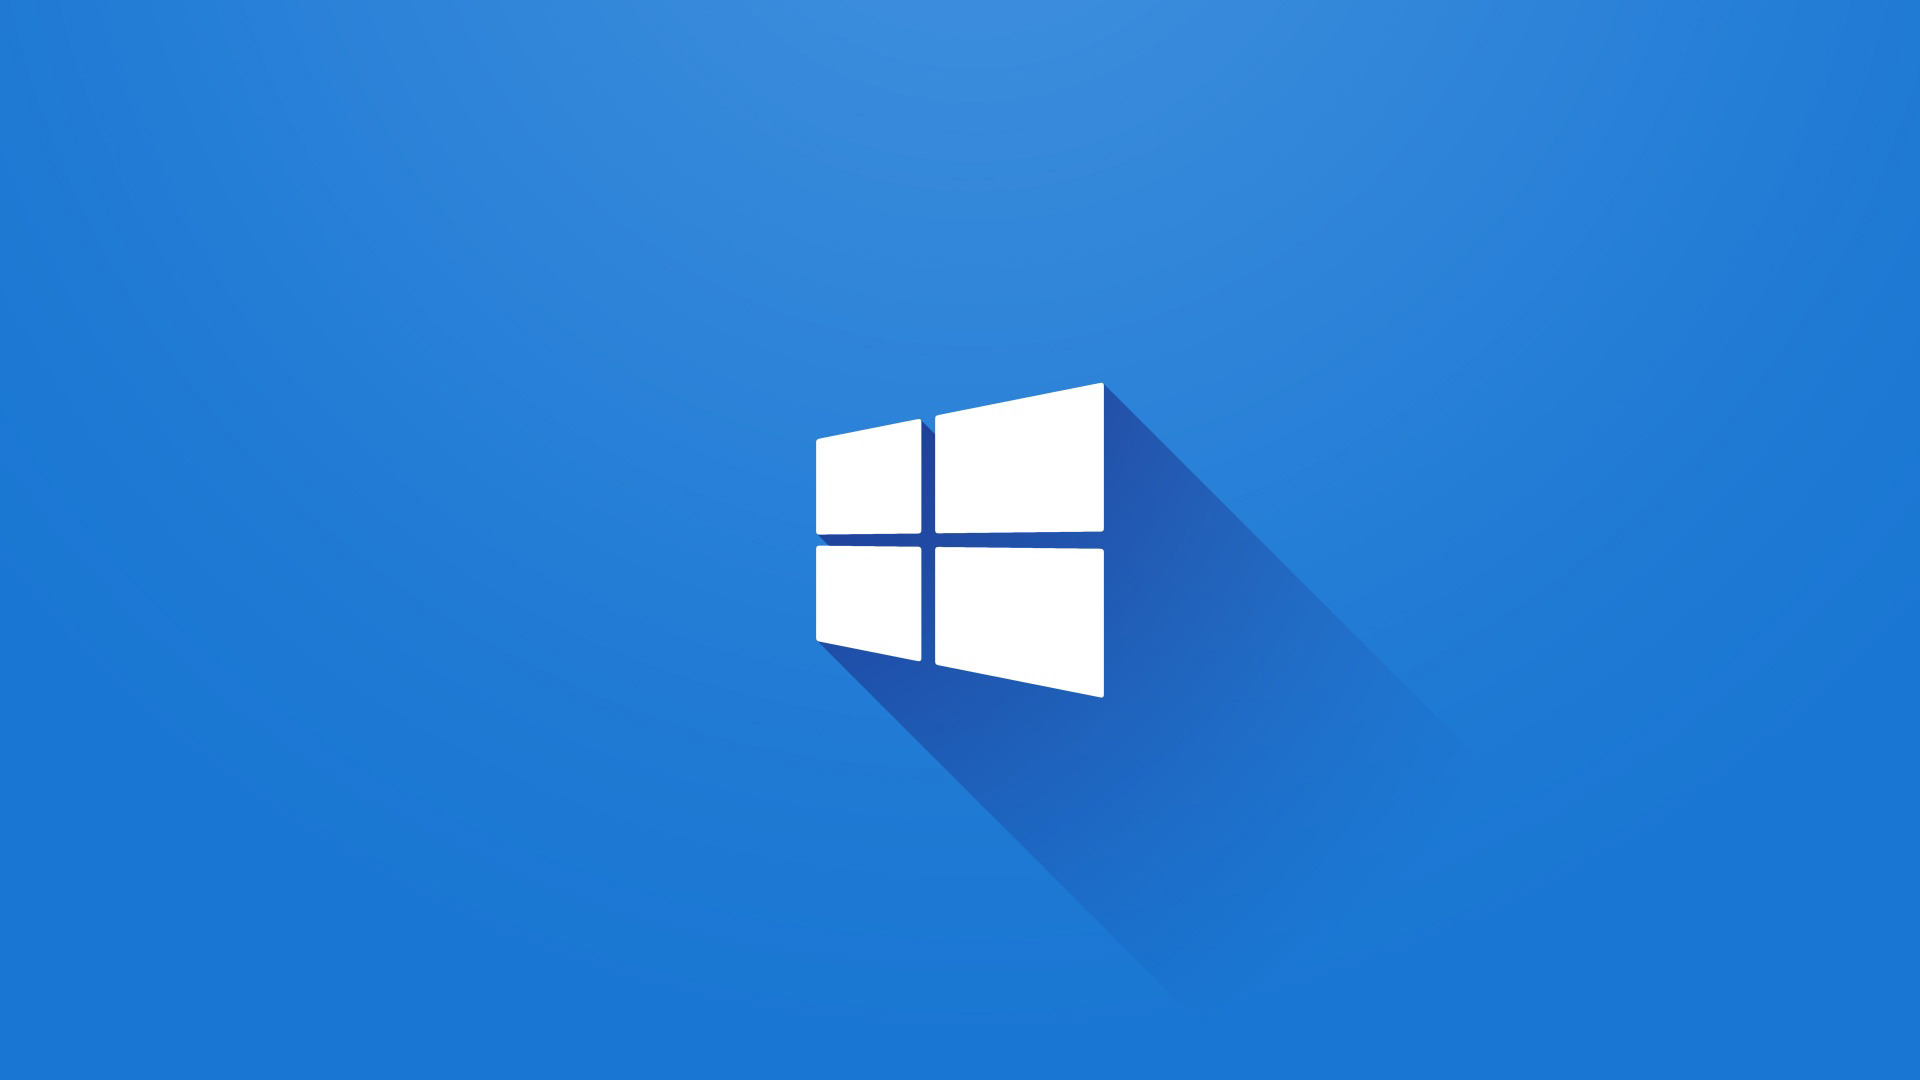 arcsoft software for windows 10